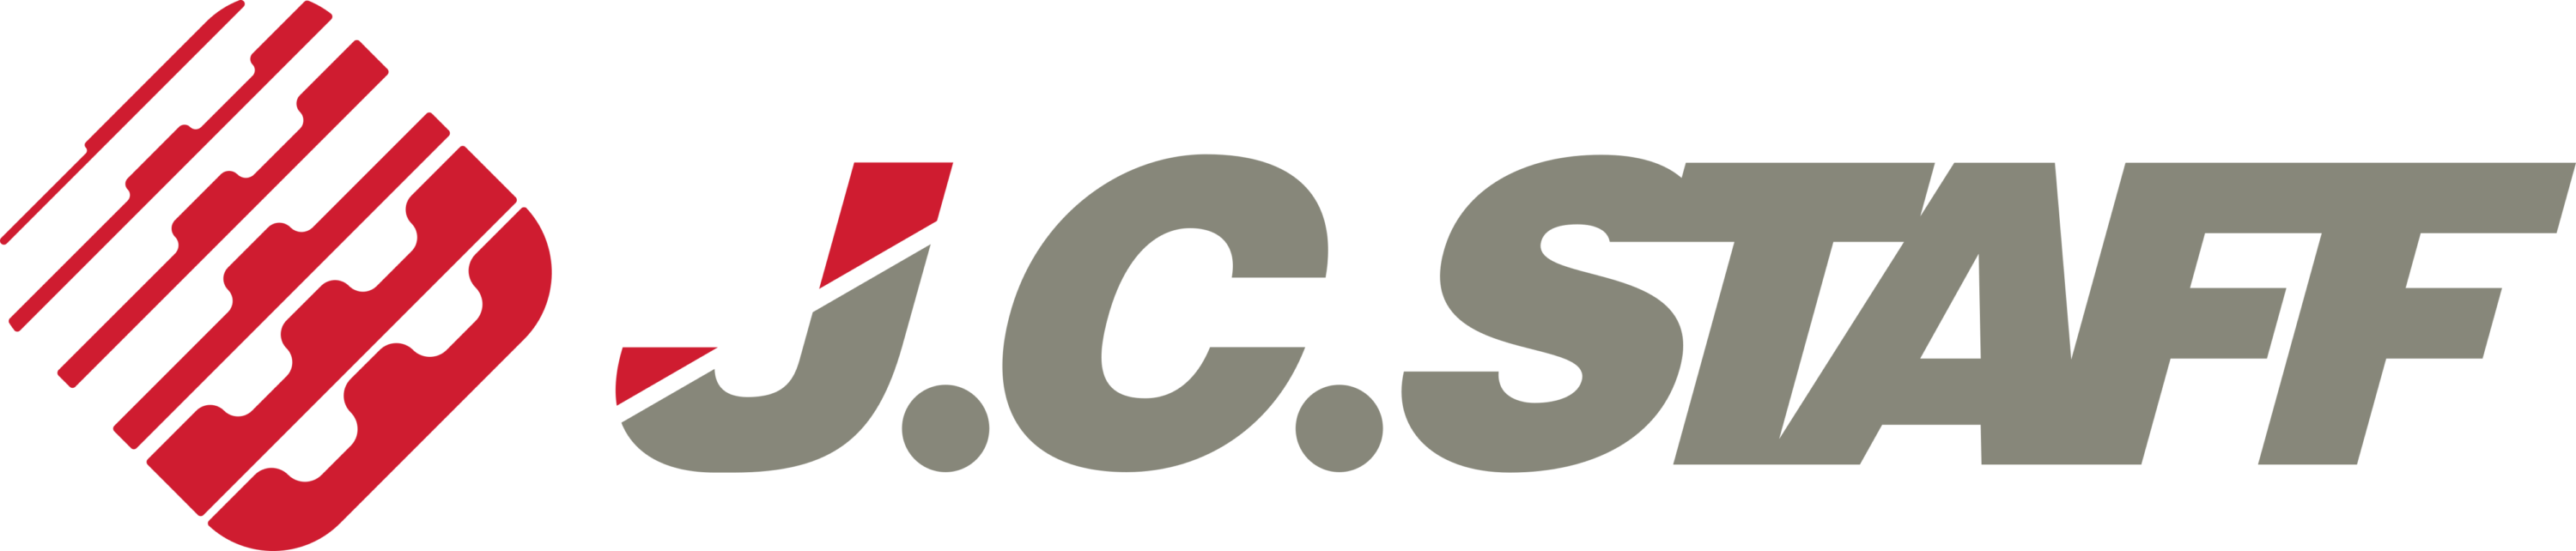 J.C. Staff Logo